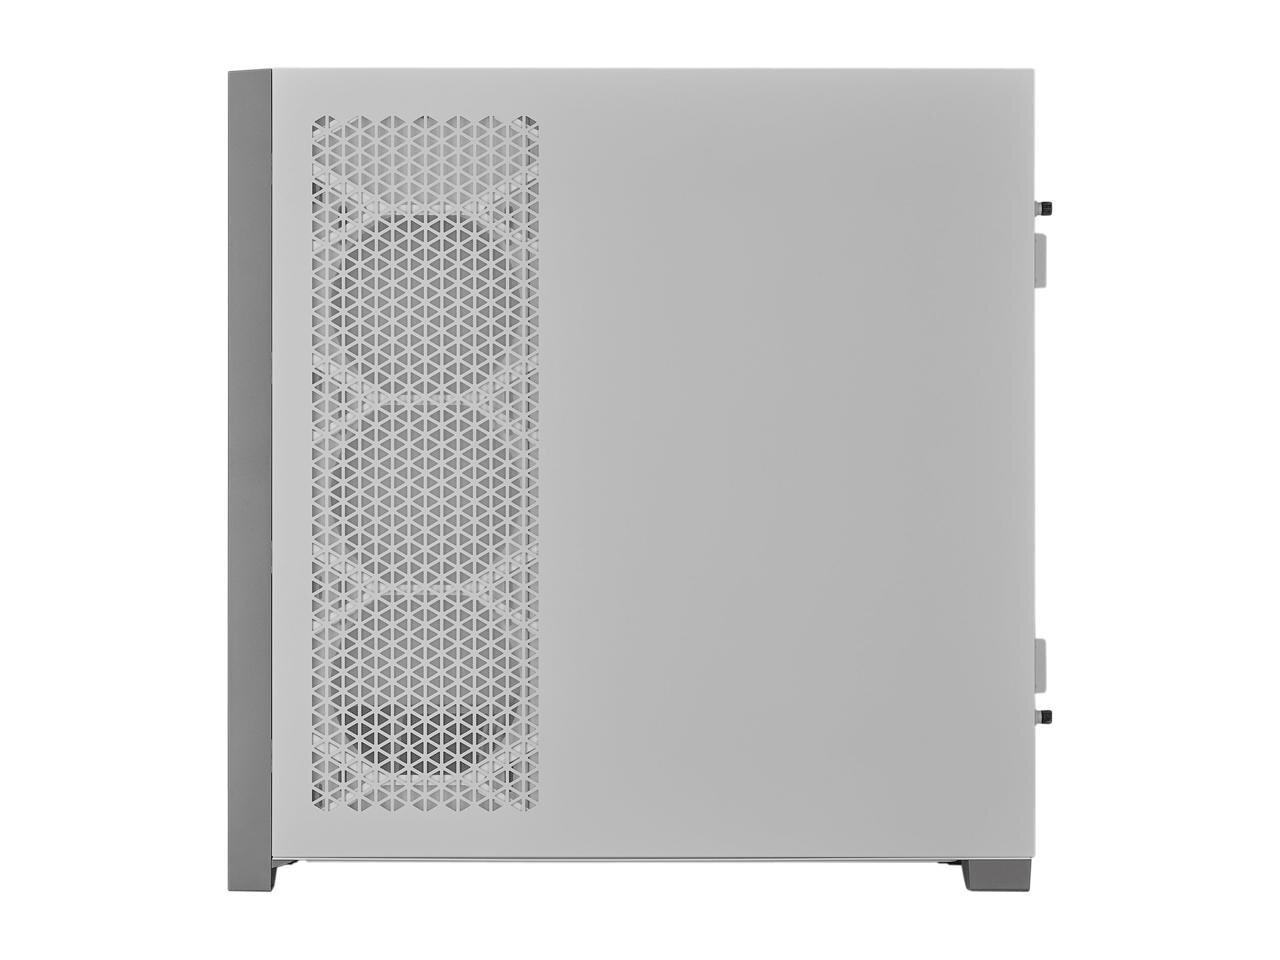 CORSAIR iCUE 5000X RGB Tempered Glass Mid-Tower ATX PC Smart Case, White,  CC-9011213-WW 